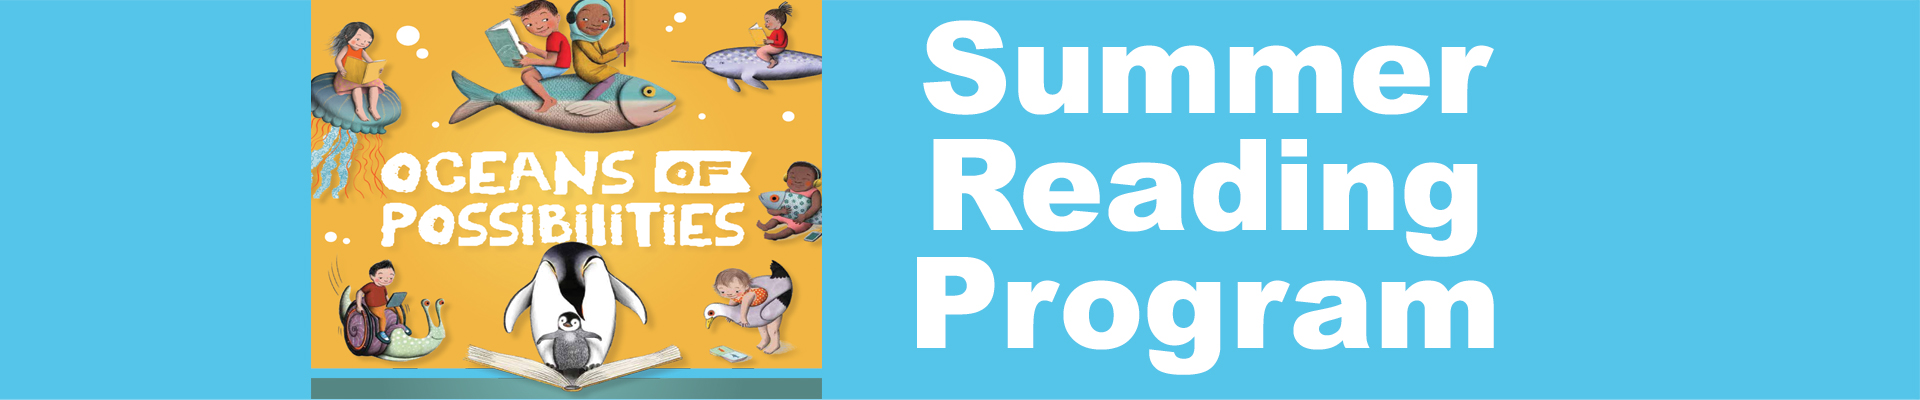 Summer Reading Program Details